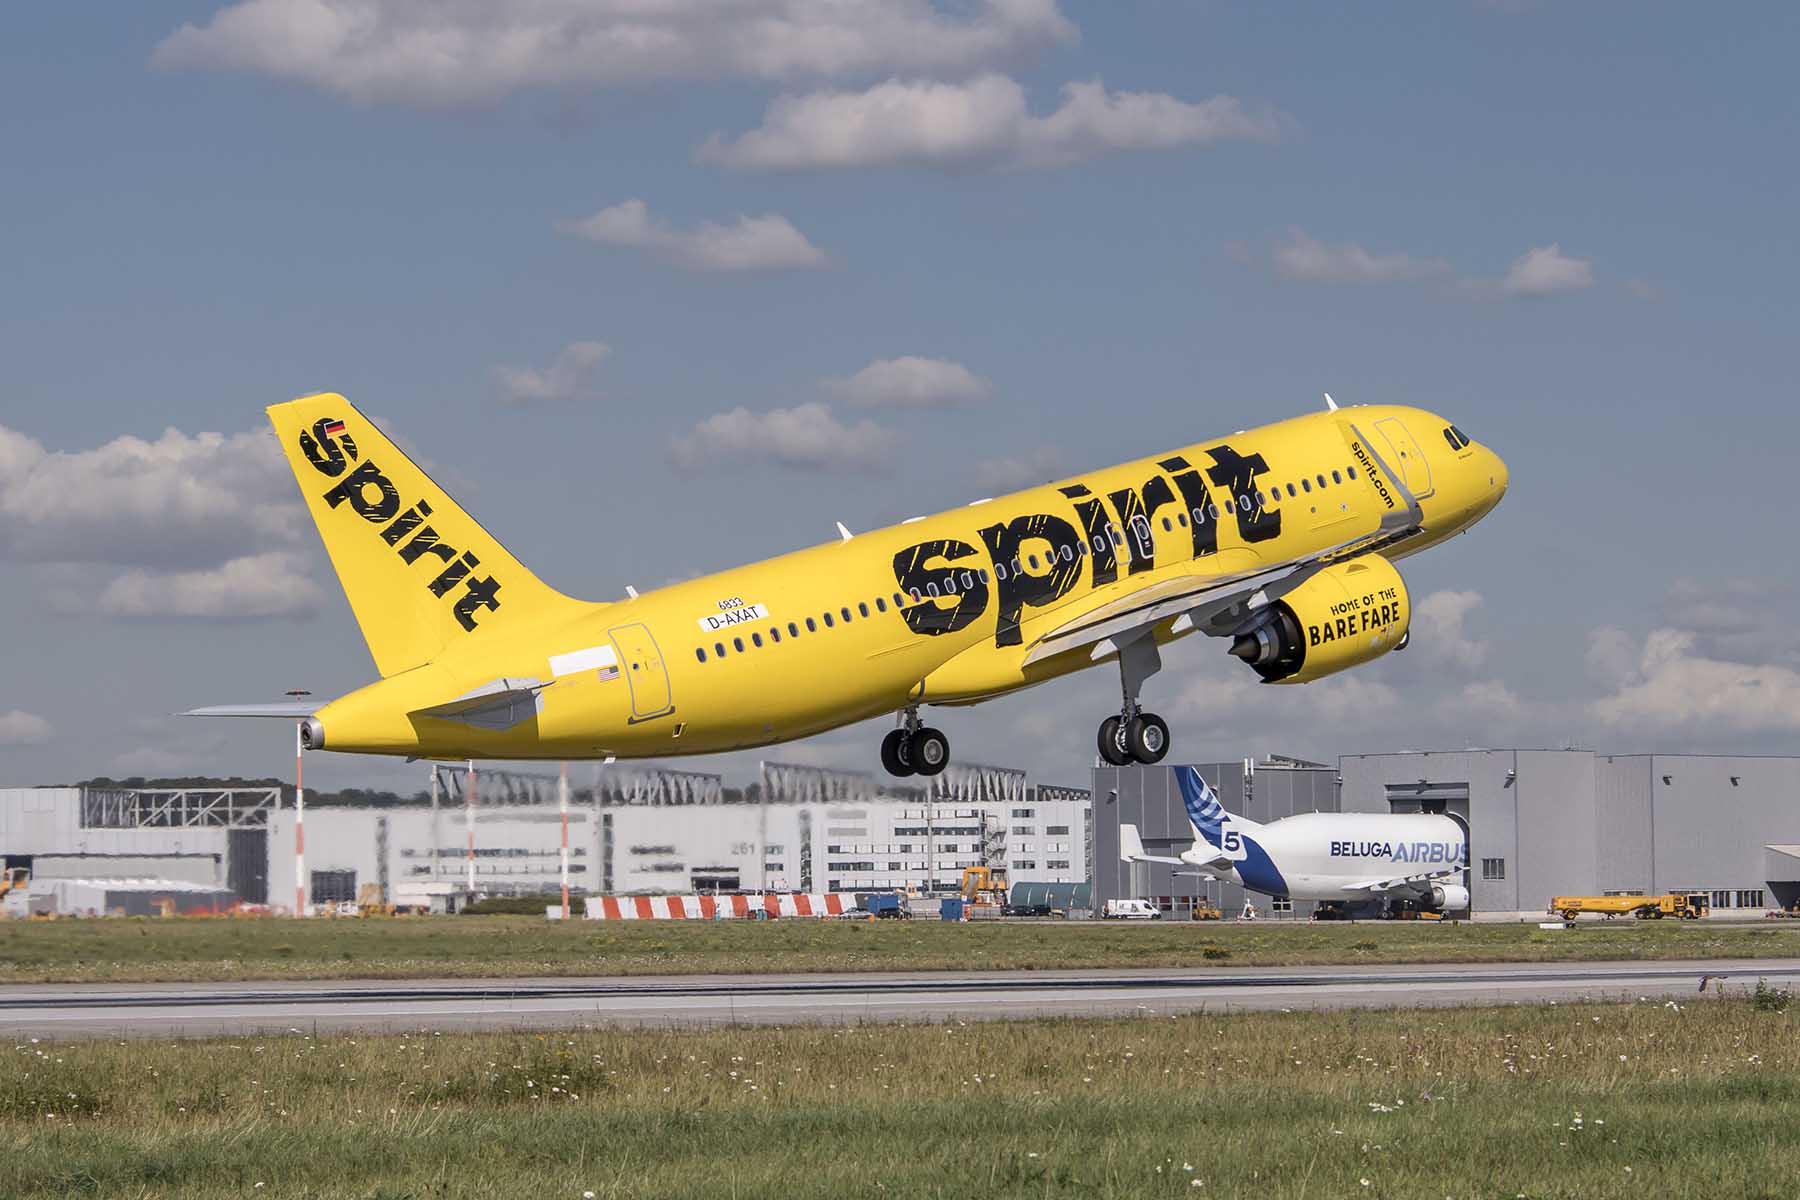 Spirit Airlines เคาะรายการสั่งซื้อฝูงบิน Airbus ตระกูล A320neo 100 ลำ 1